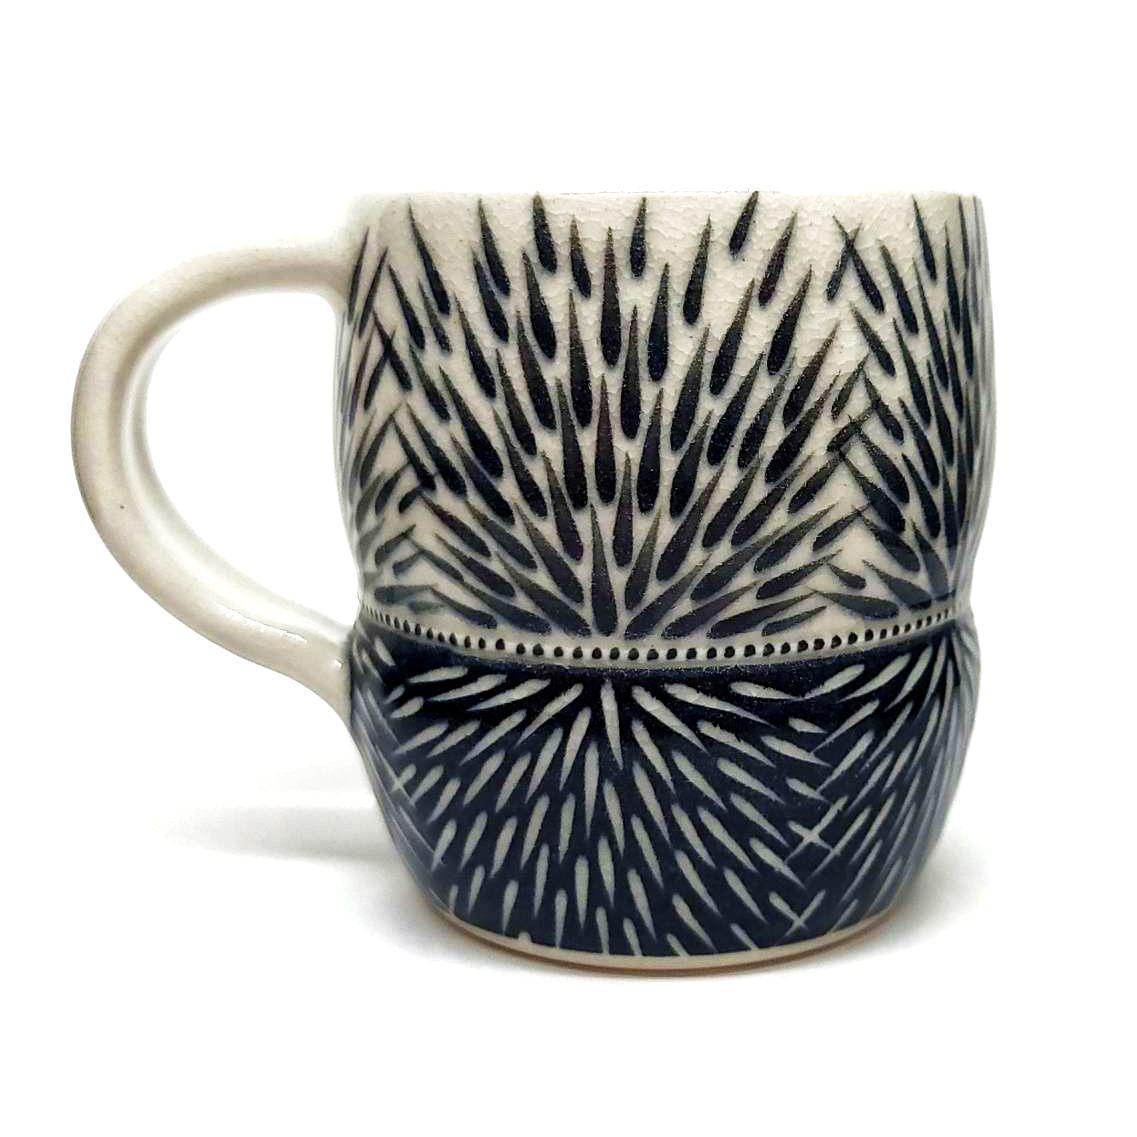 Mug - Small in Monochrome Mirrored Bursts by Britt Dietrich Ceramics